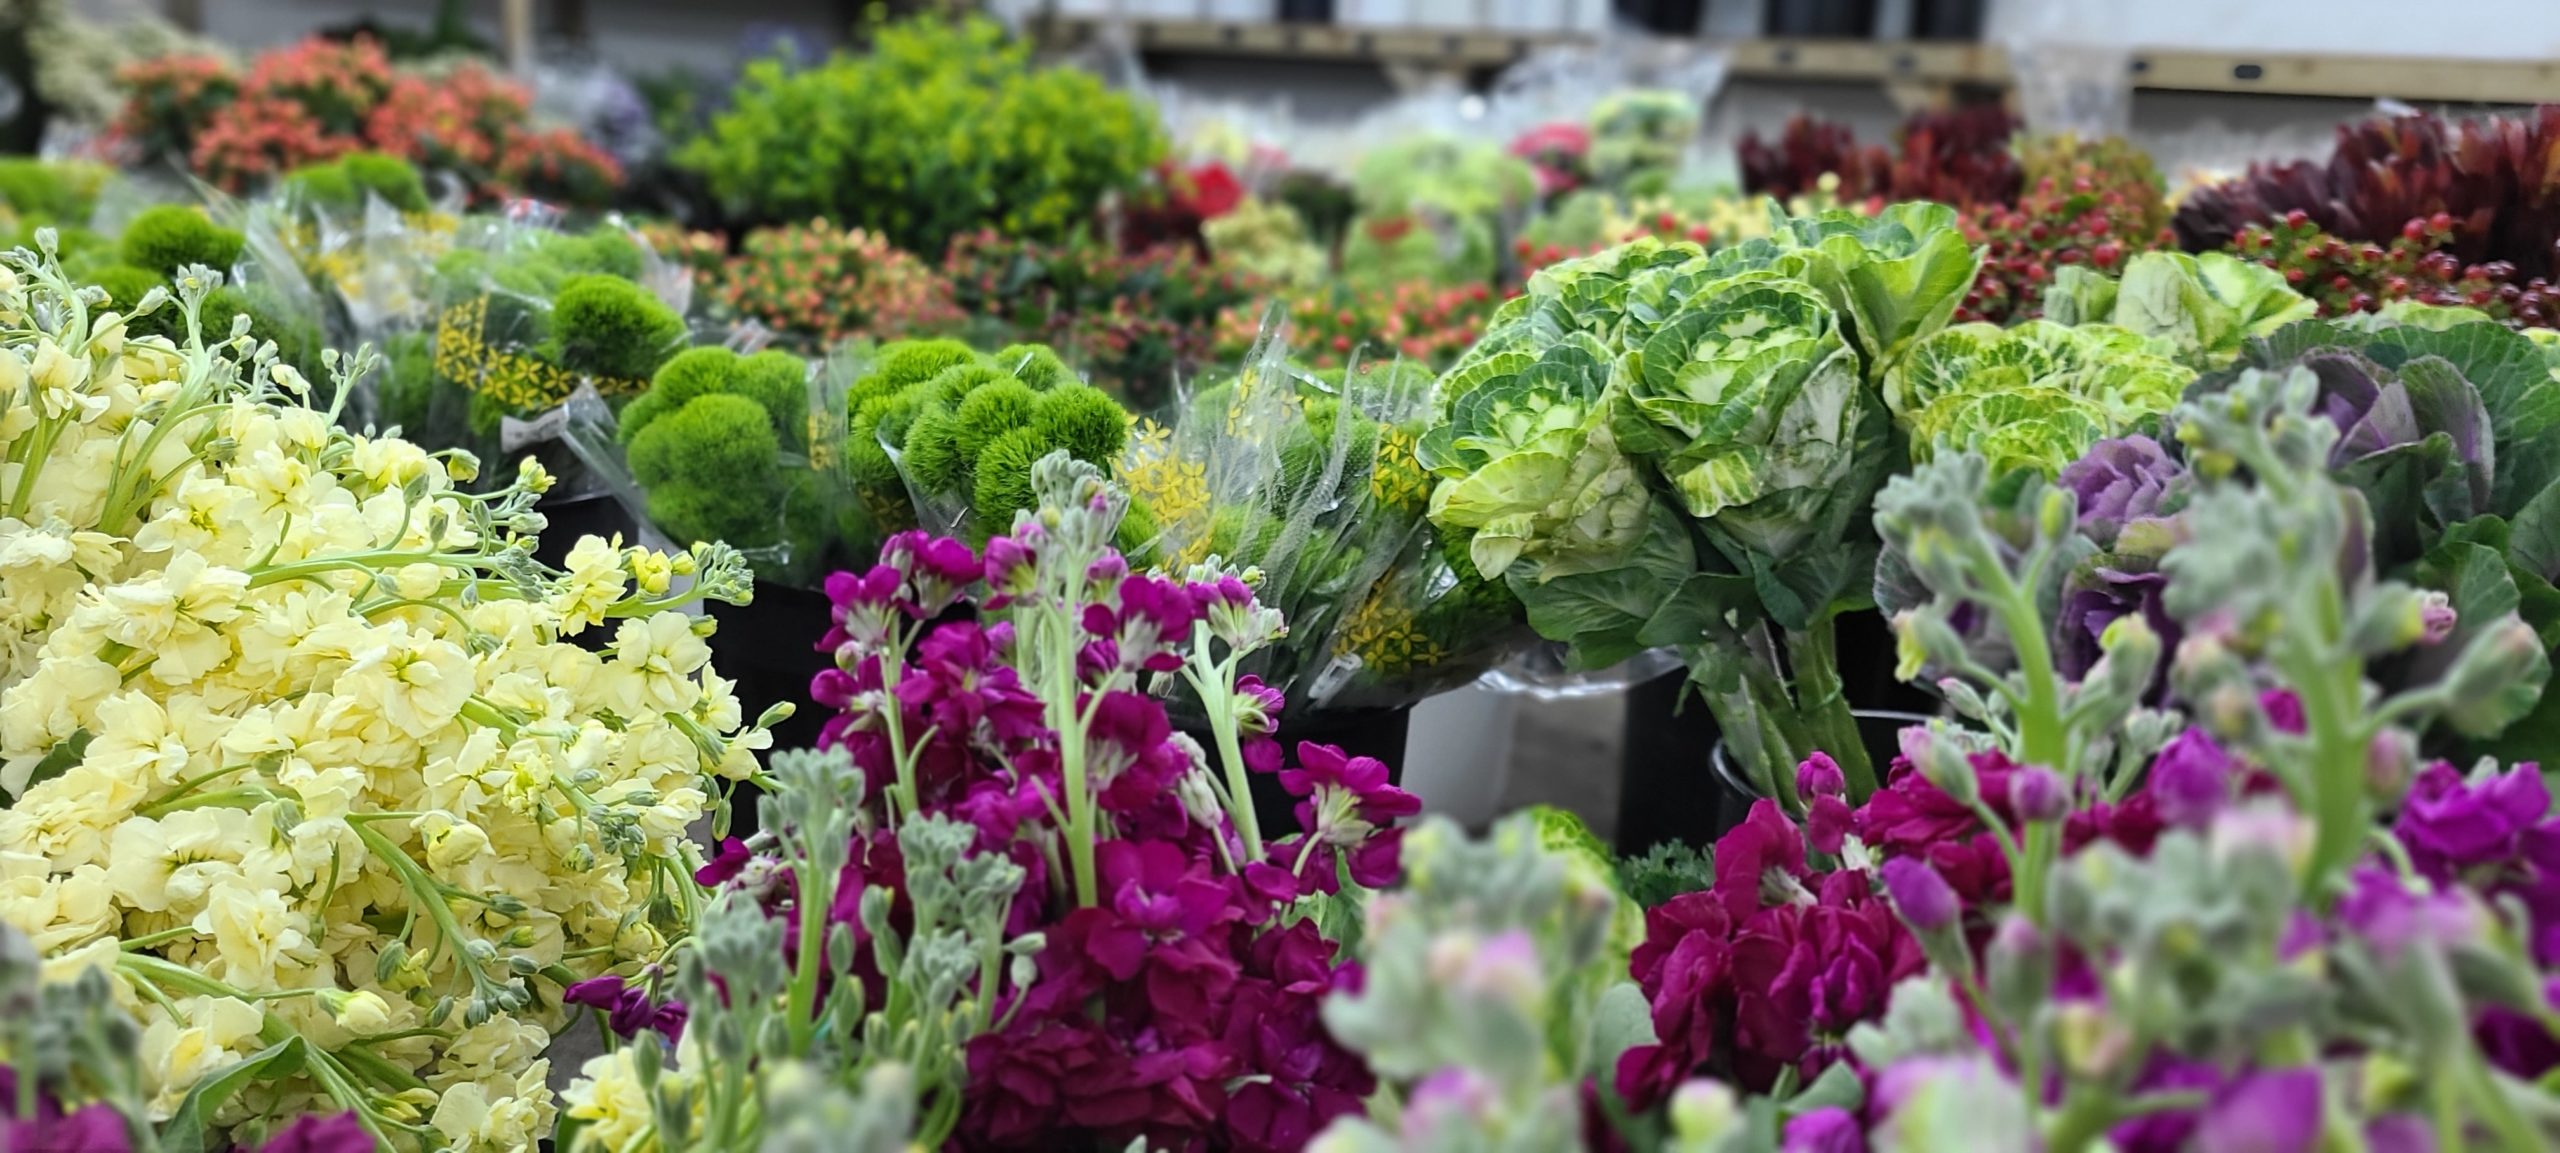 Berkeley Florist Supply, Wholesale Flowers